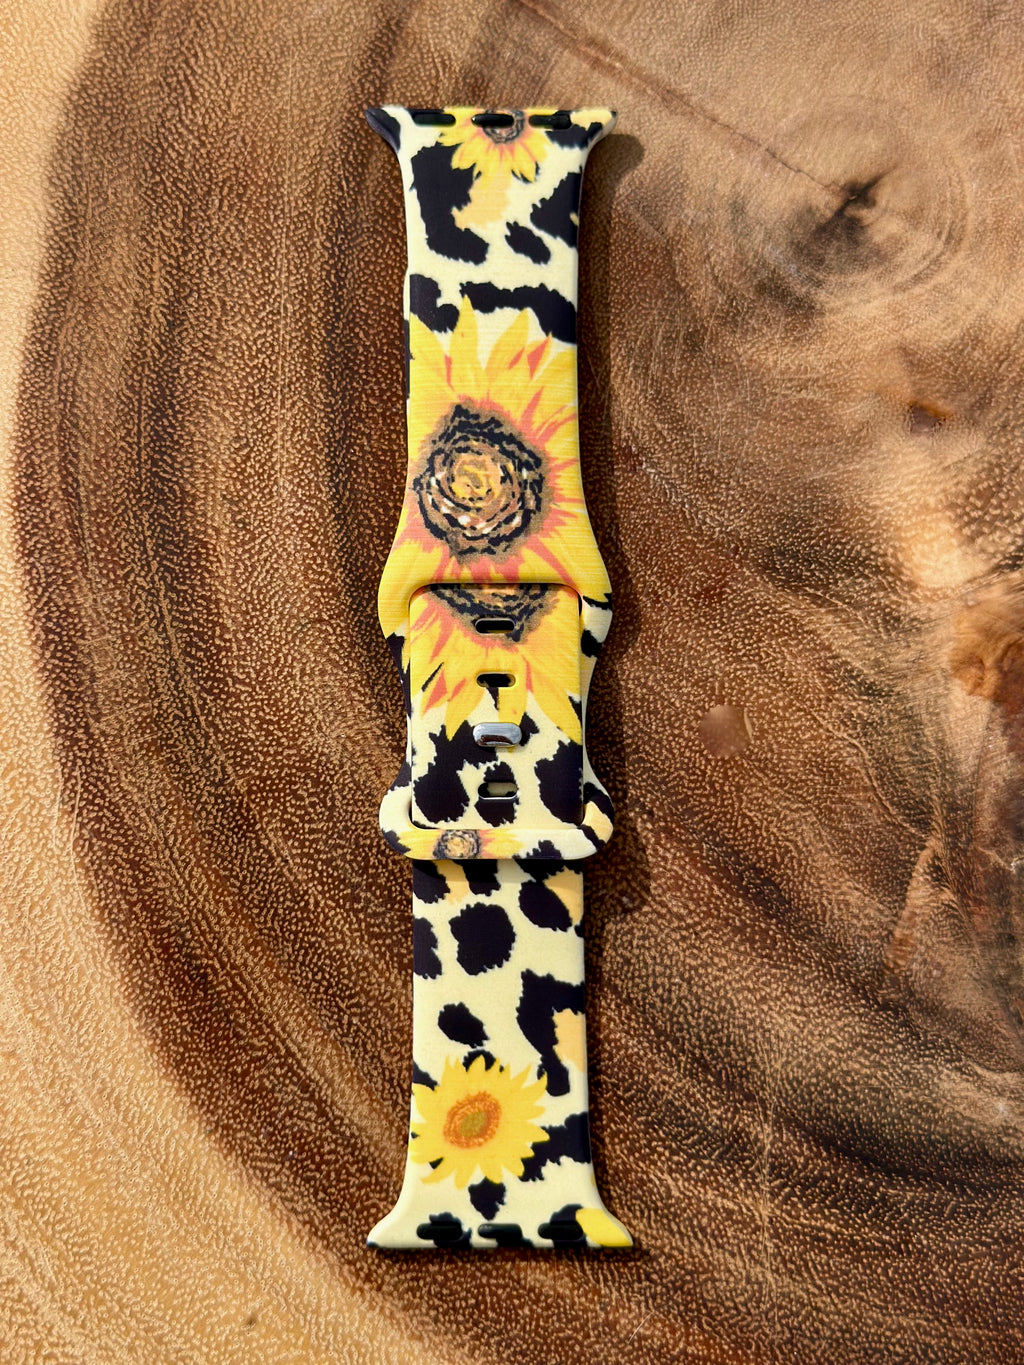 Leopard Sunflower